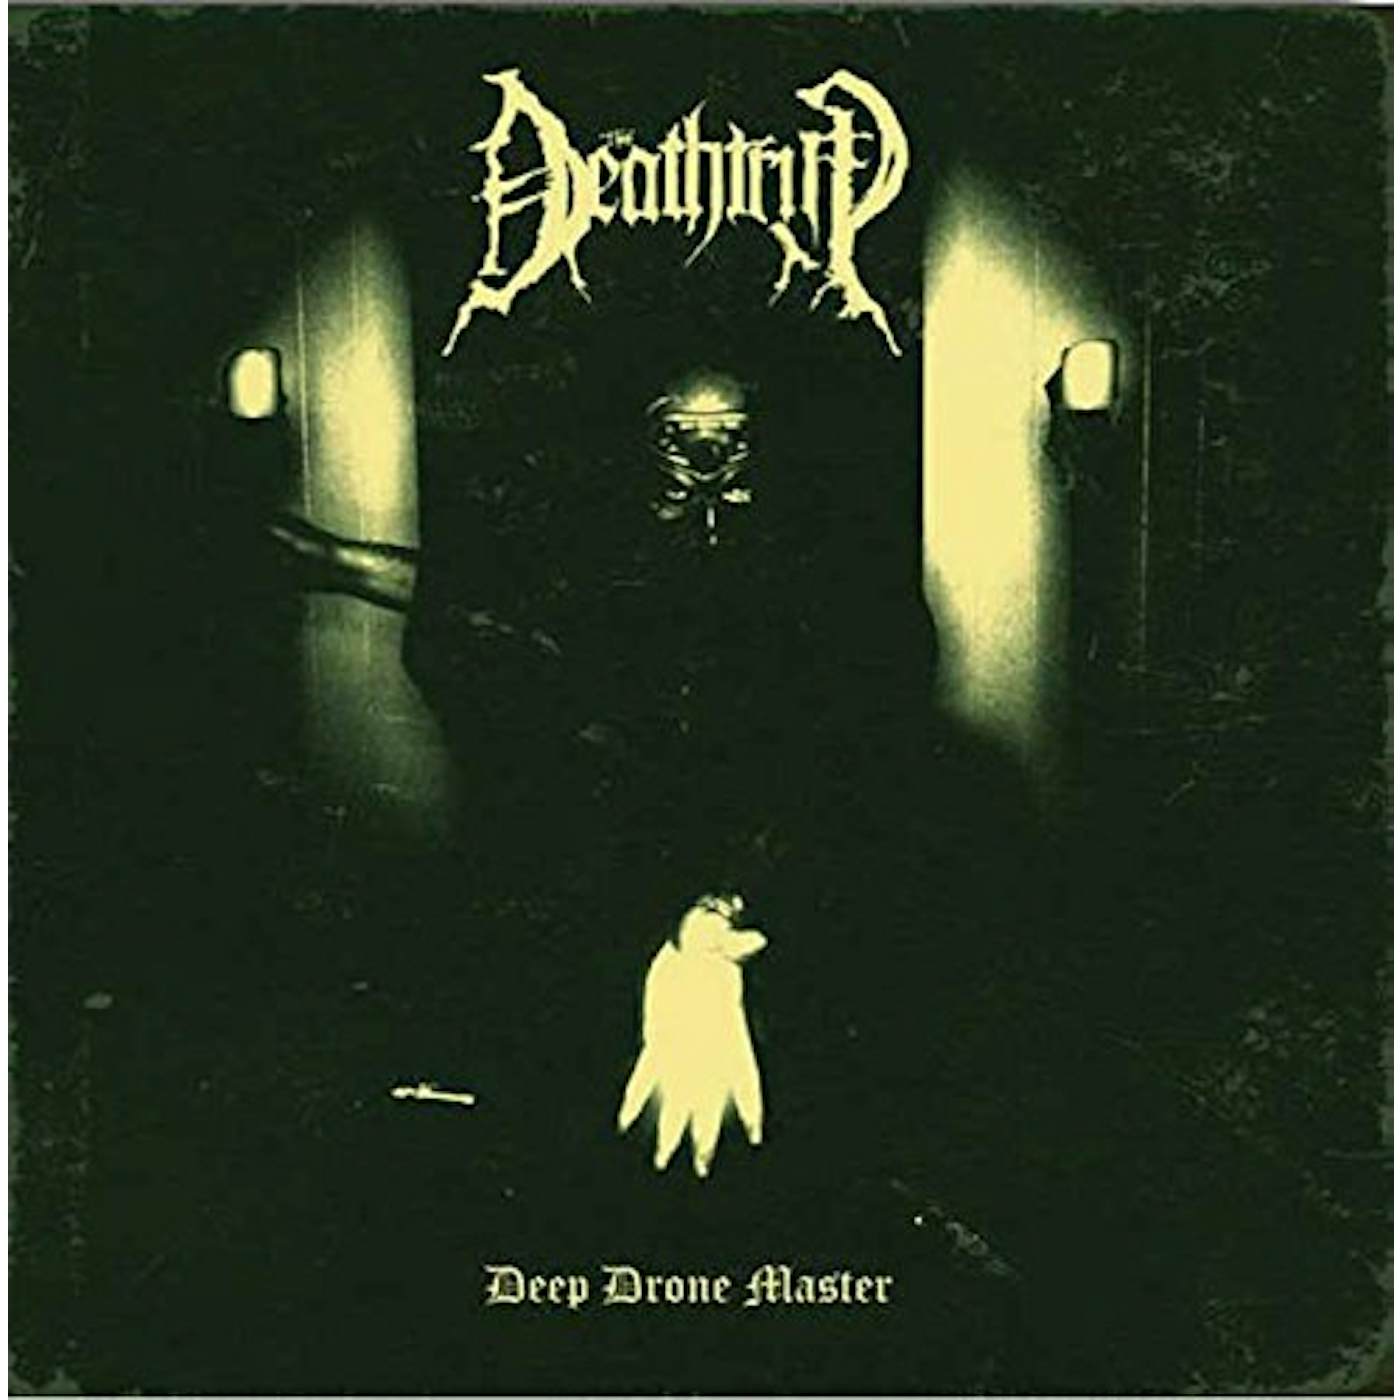 Deathtrip DEEP DRONE MASTER CD